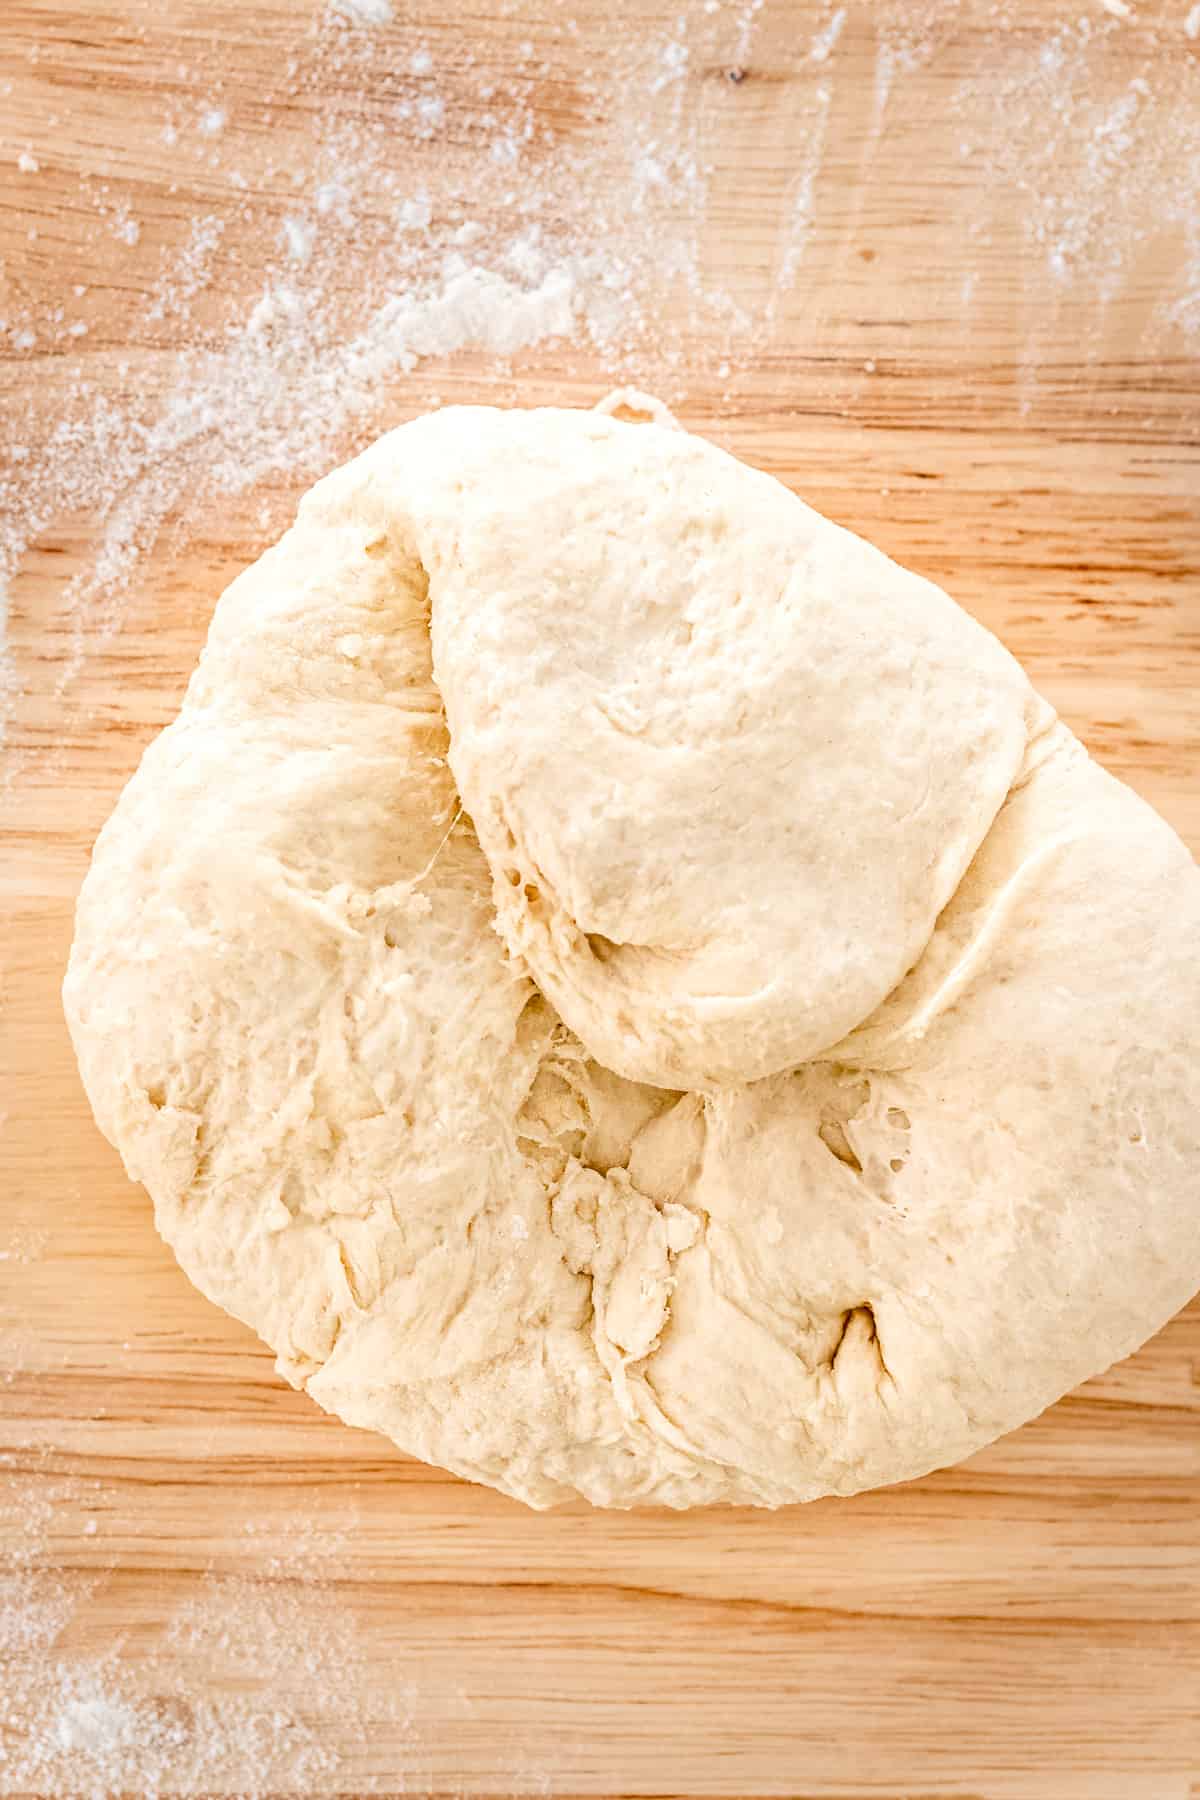 Kneading pizza dough.